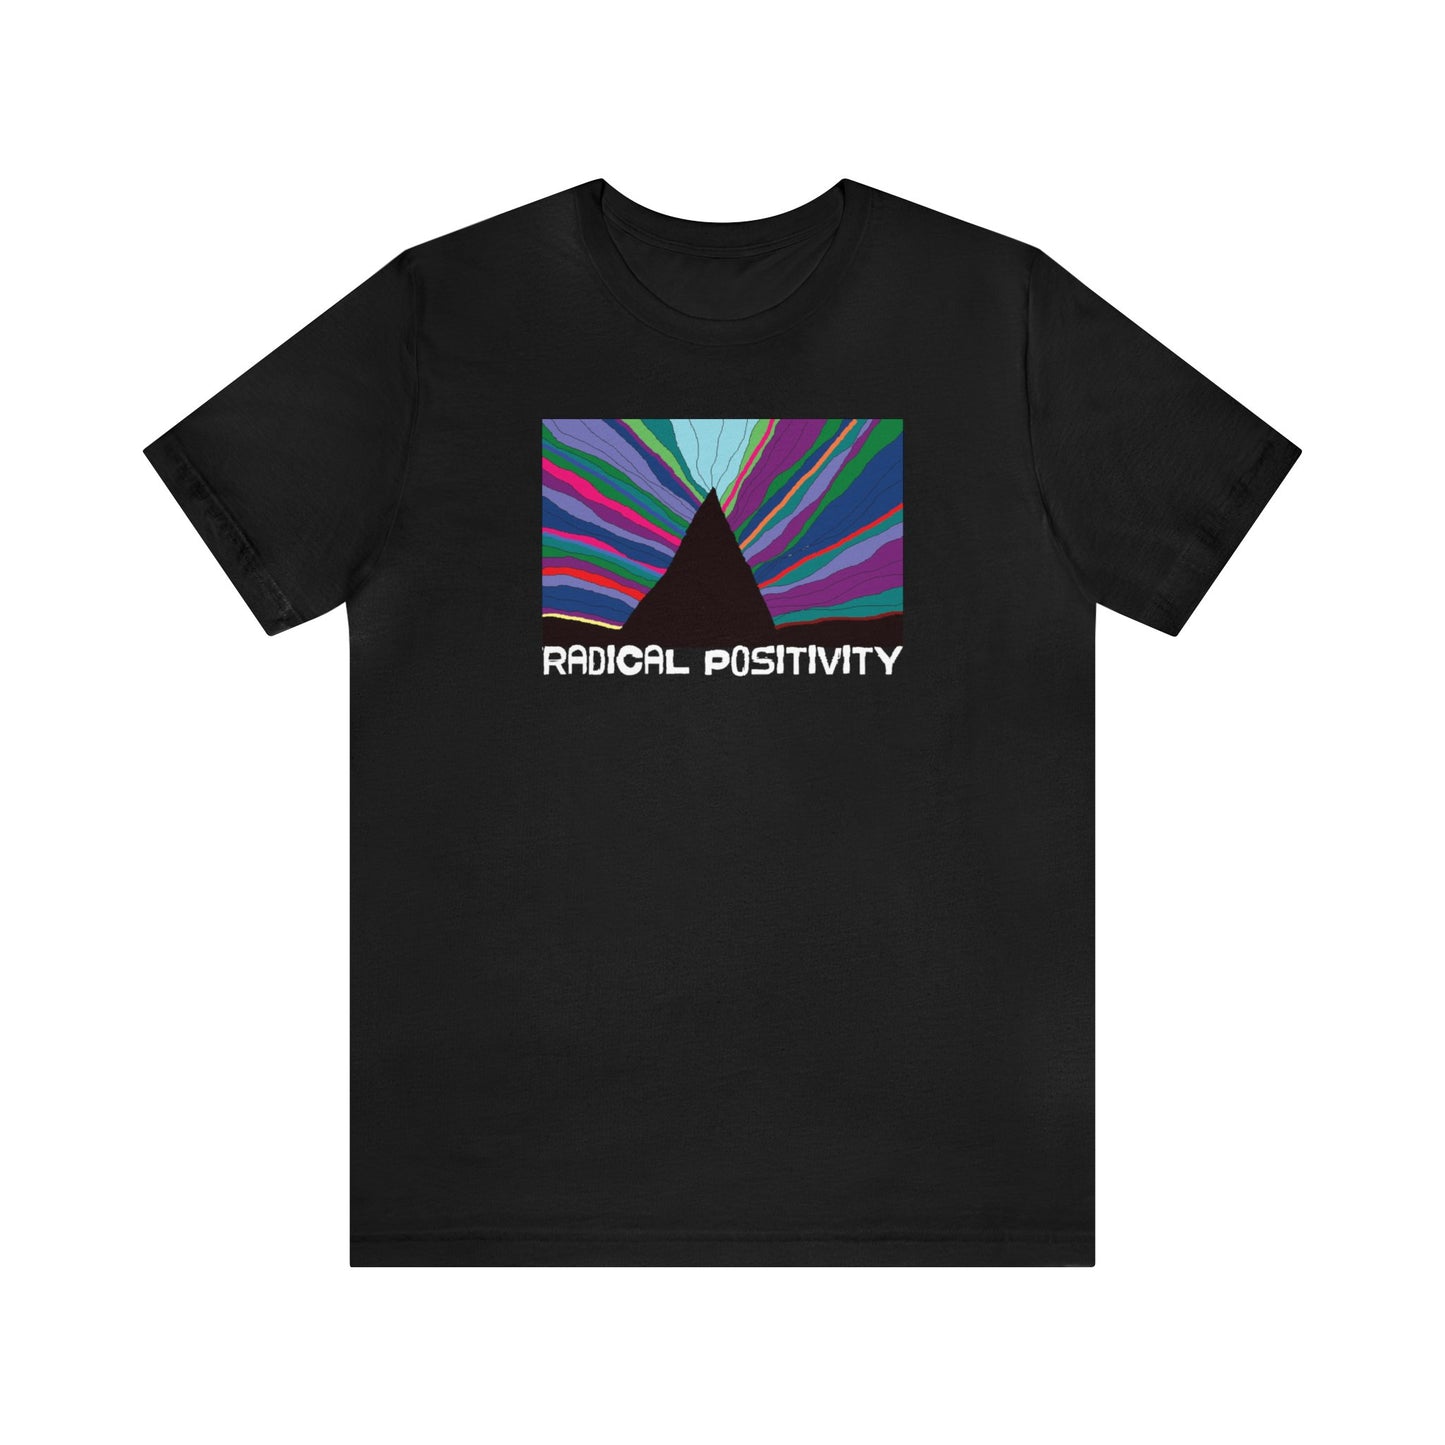 RADICAL POSITIVITY Tshirt